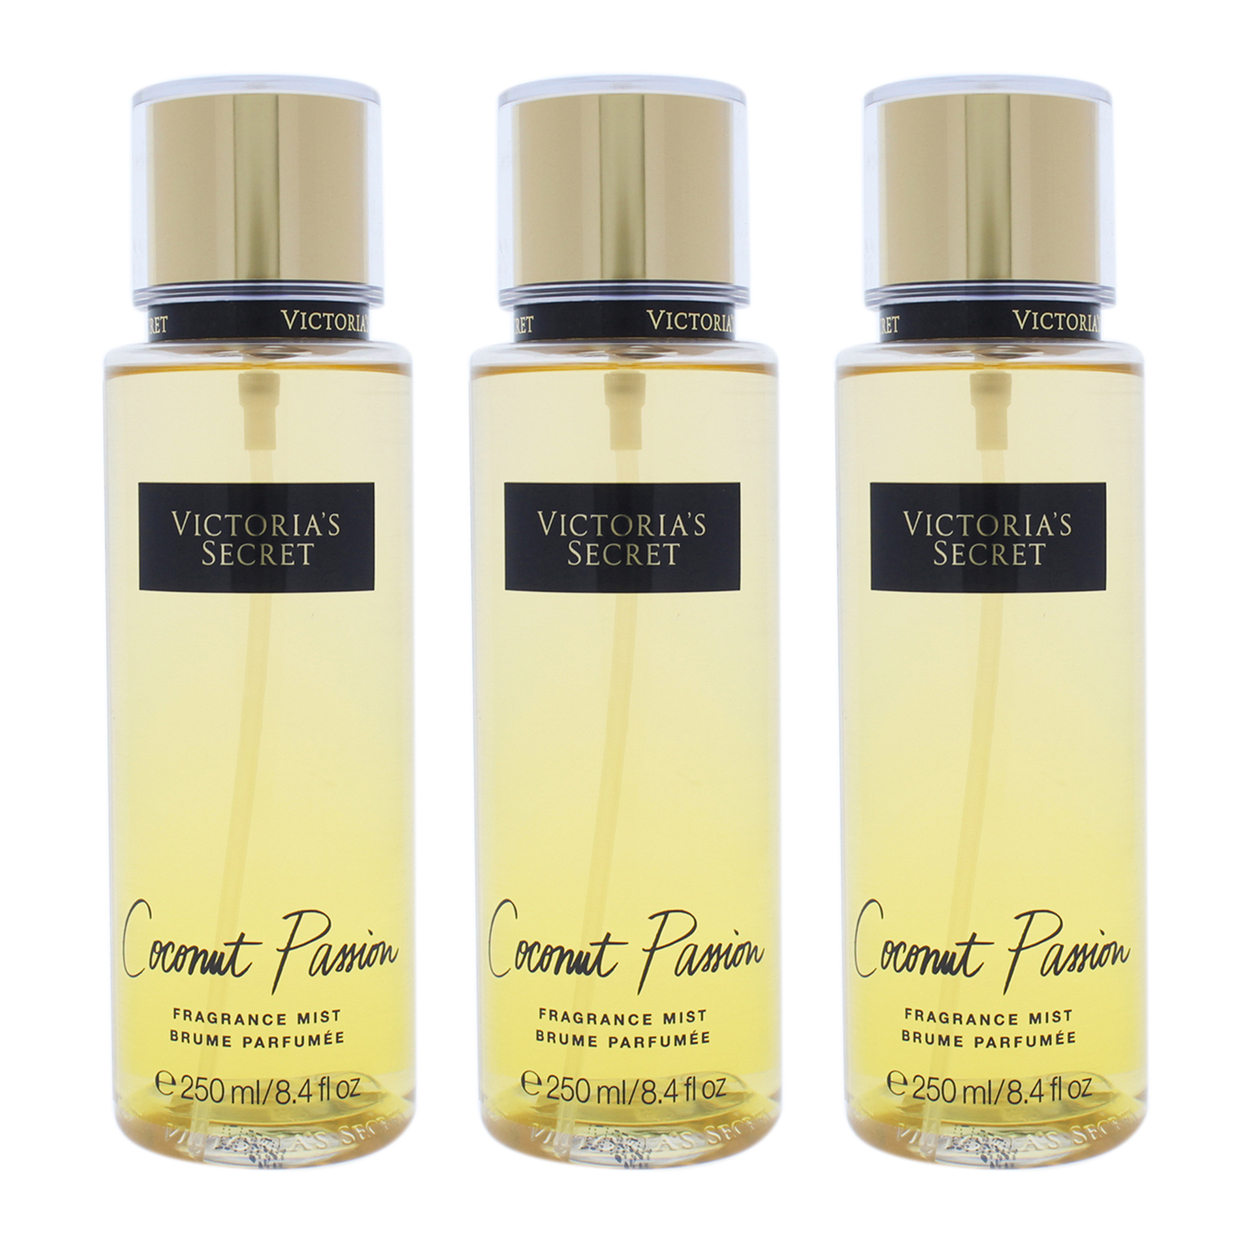 Victoria's Secret Coconut Passion - Pack Of 3 Fragrance Mist 8.4 Oz